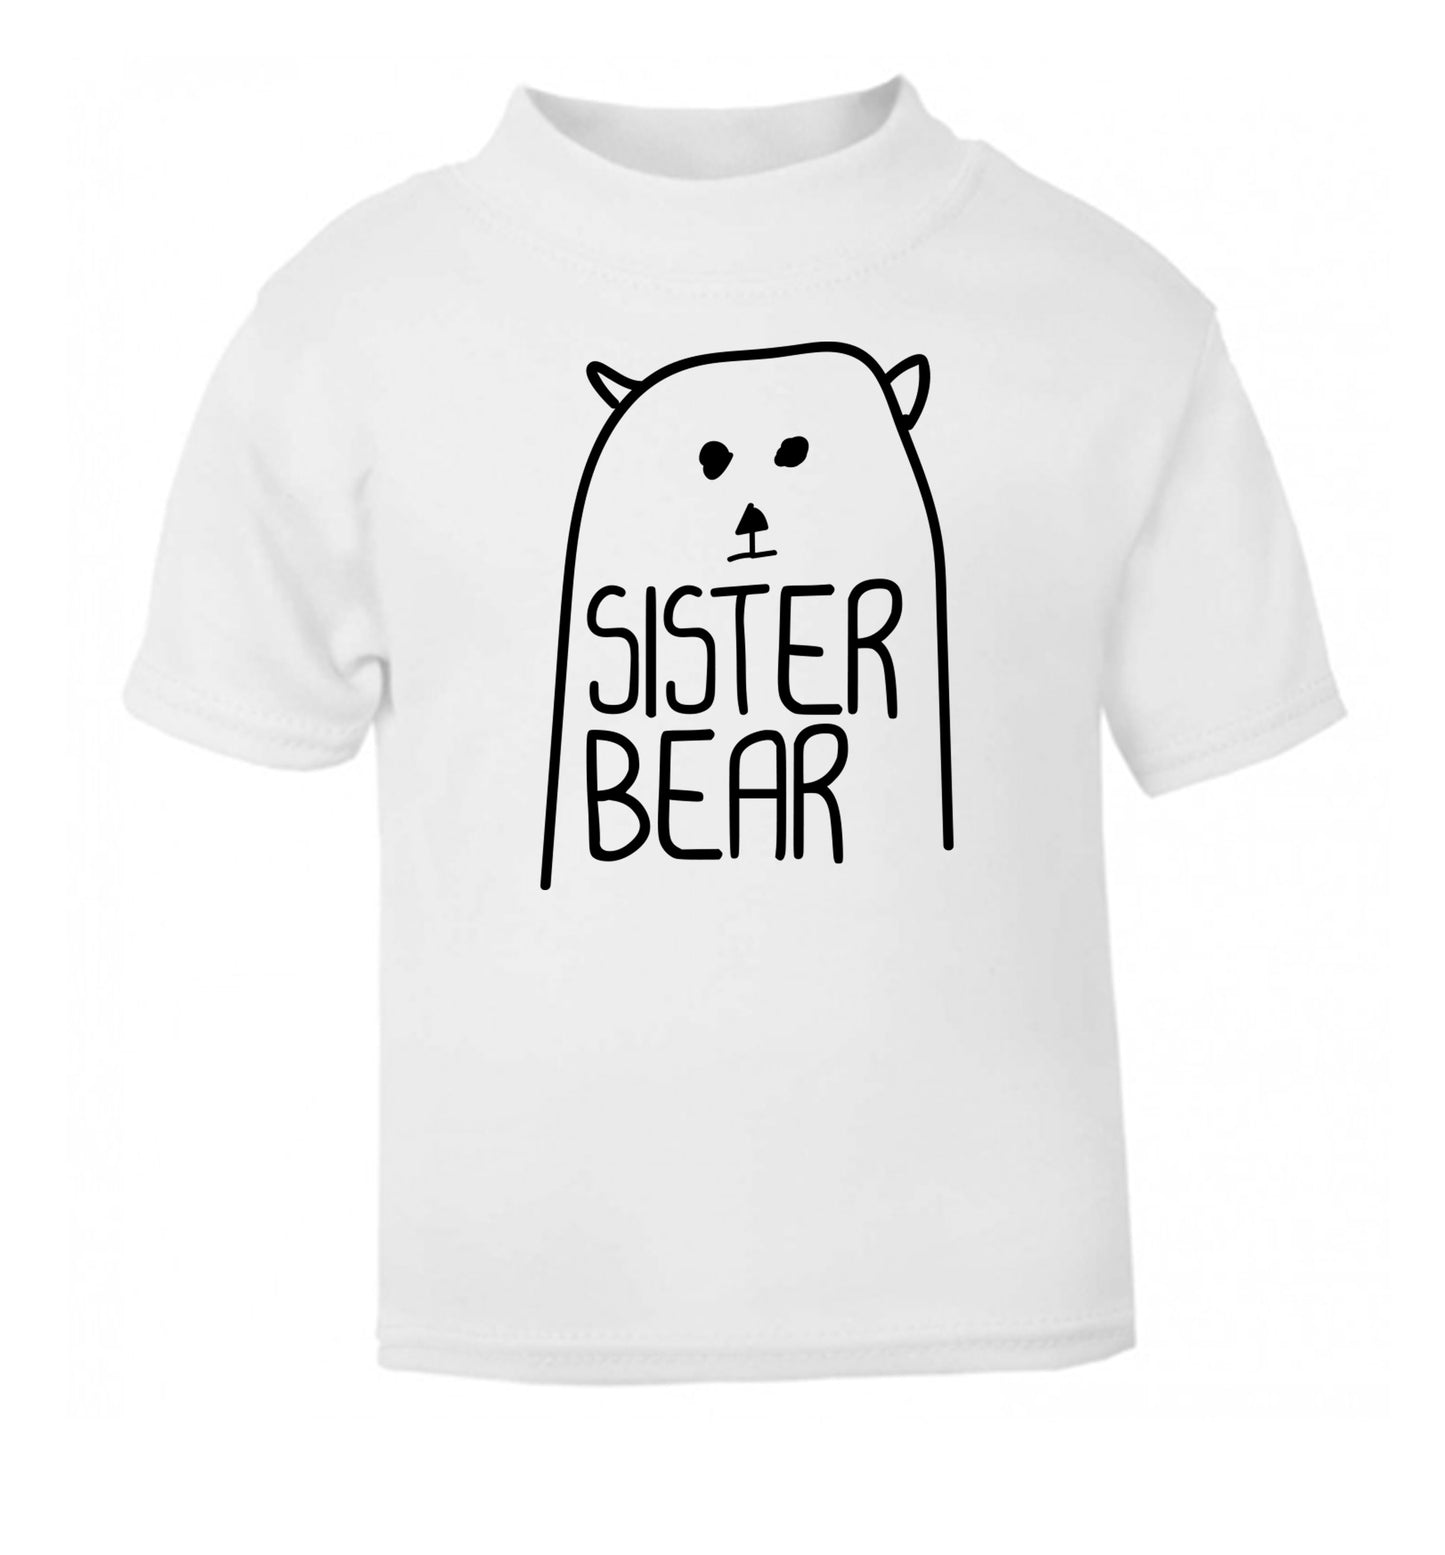 Sister bear white Baby Toddler Tshirt 2 Years